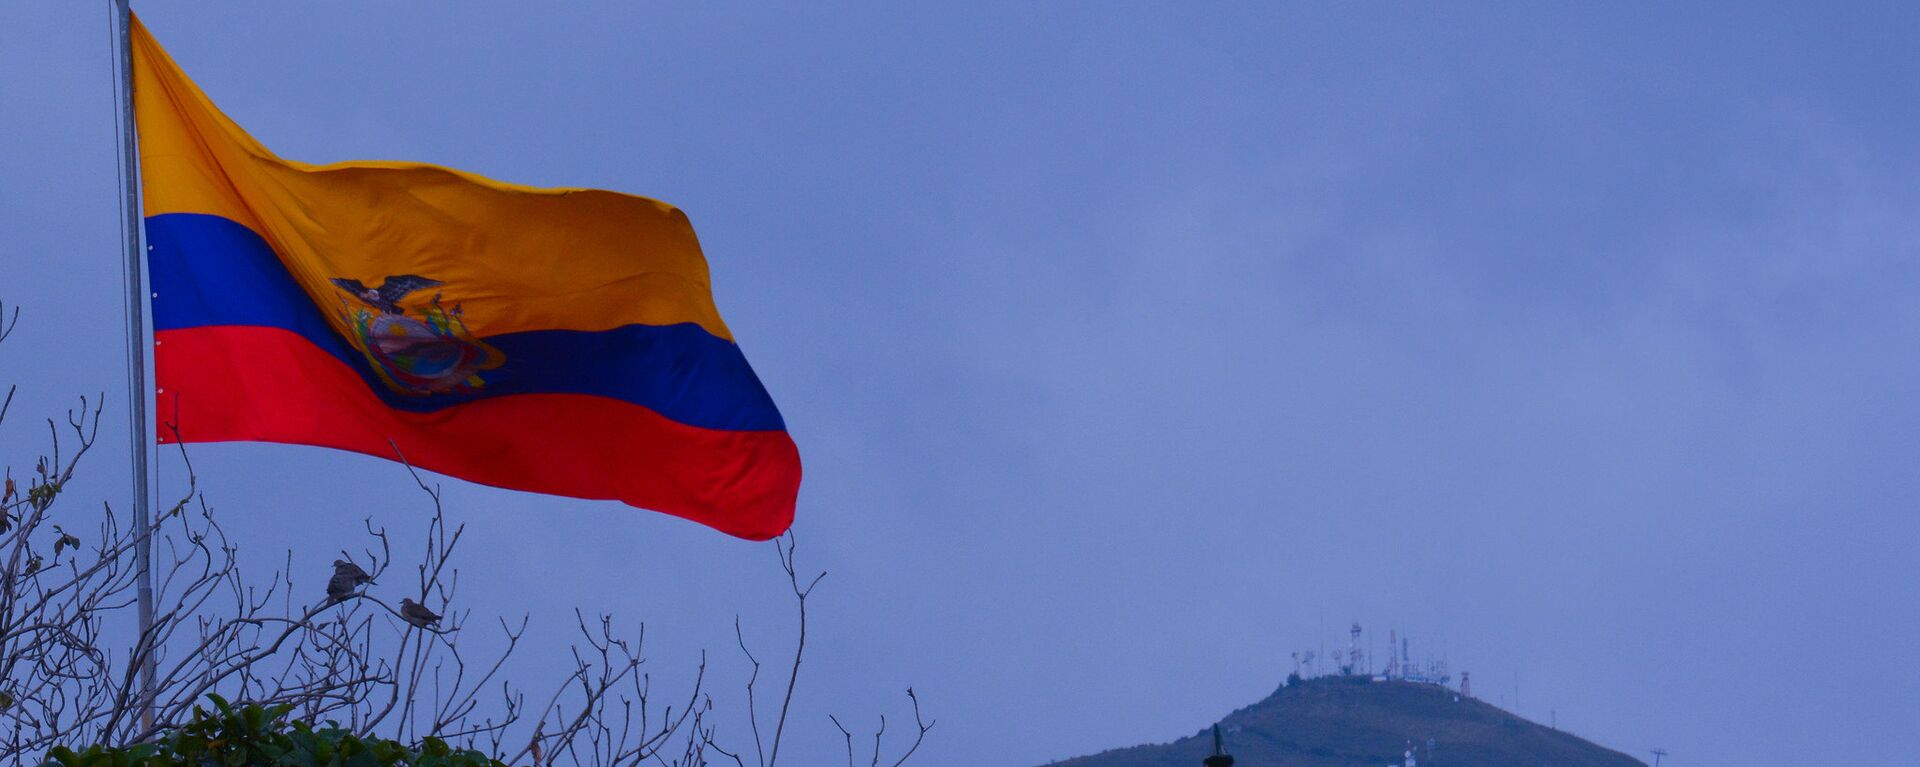 La bandera de Ecuador - Sputnik Mundo, 1920, 17.12.2021